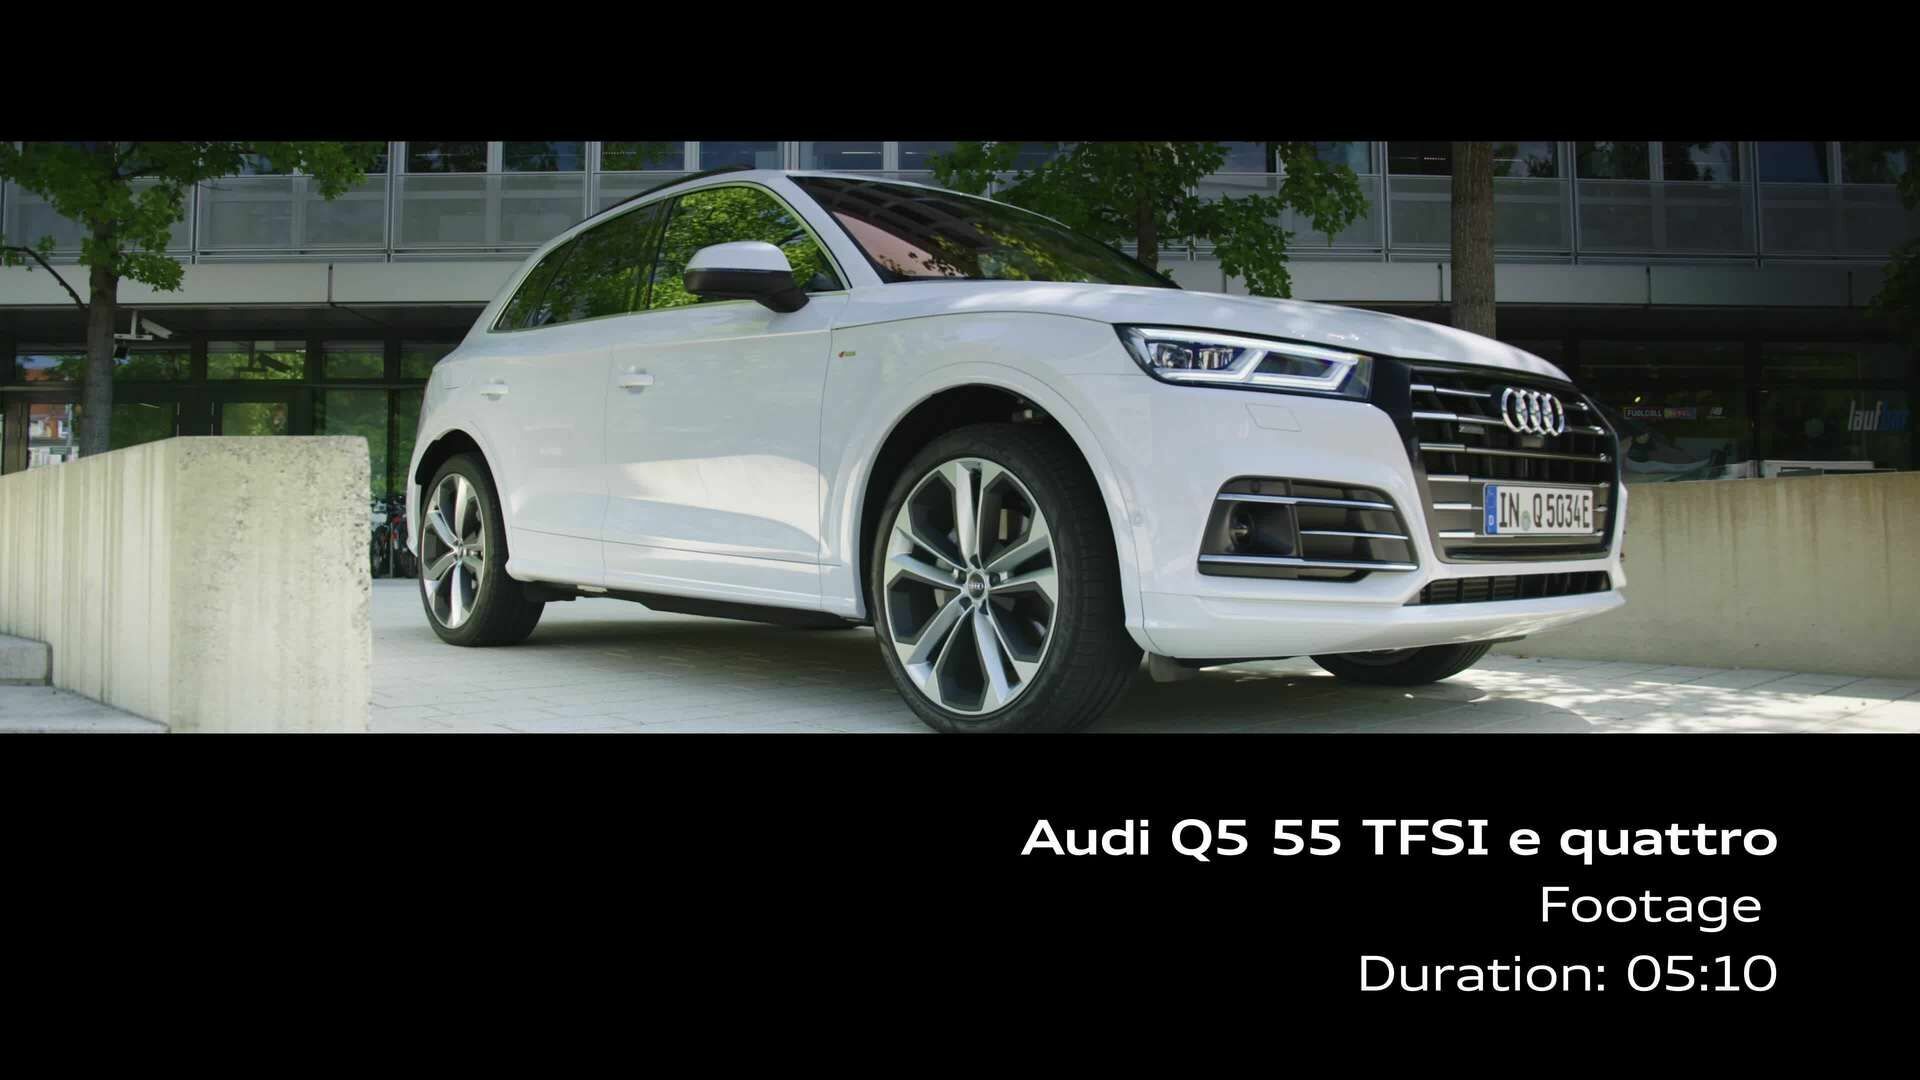 Audi Q5 55 TFSI e quattro PHEV (Footage)